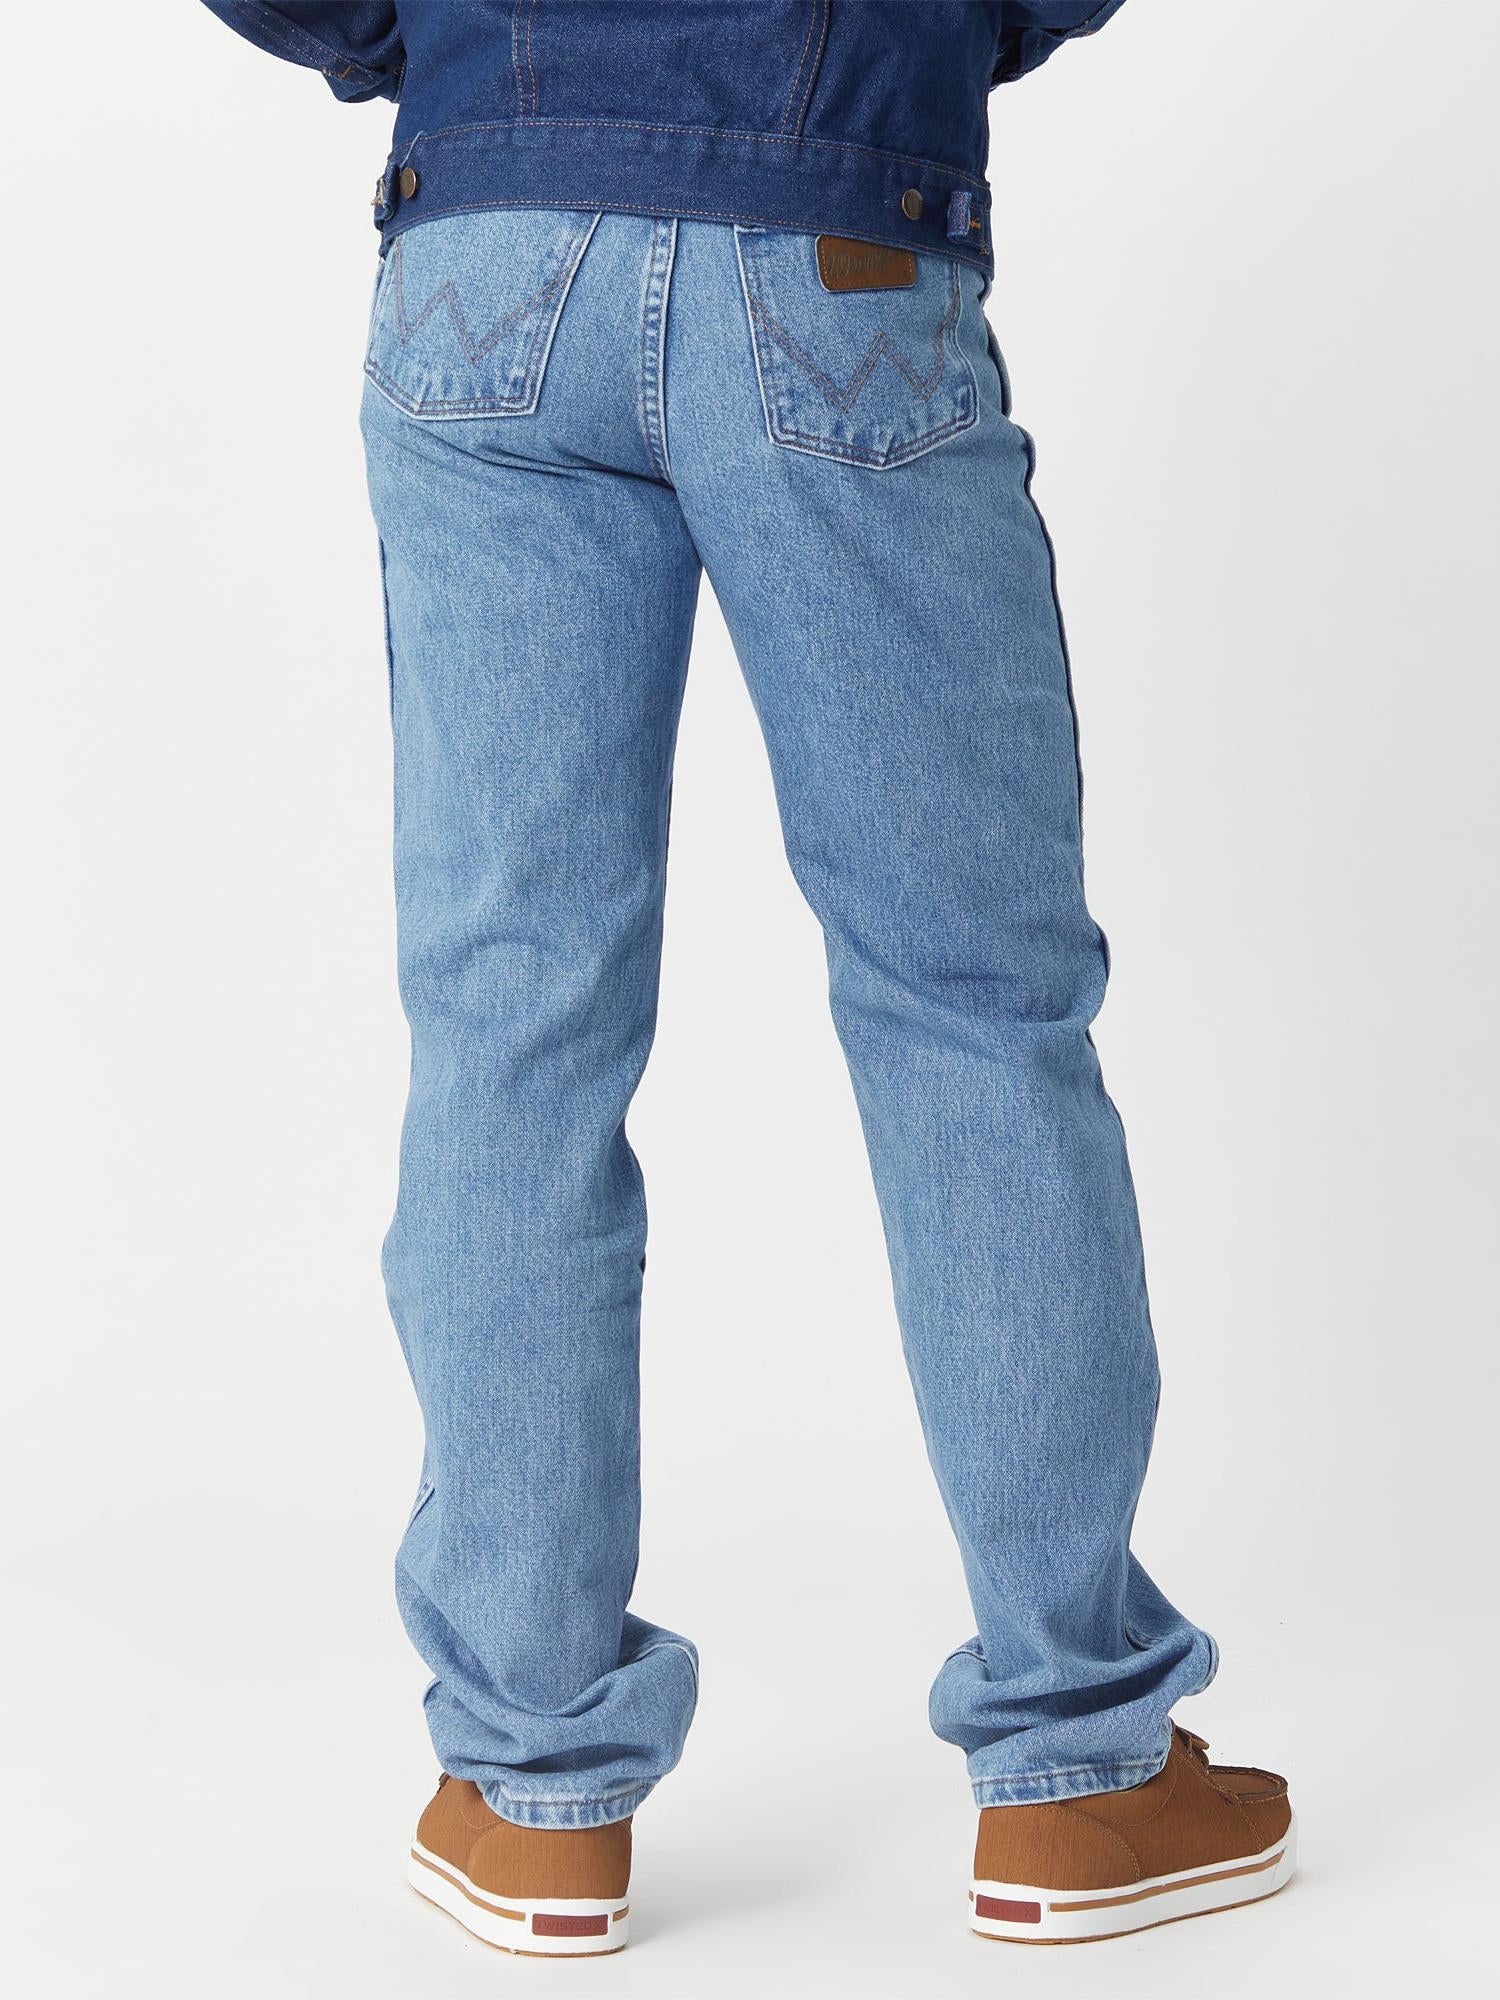 Wrangler Men's Premium Performance Cowboy Cut MD Jeans - Riding Warehouse